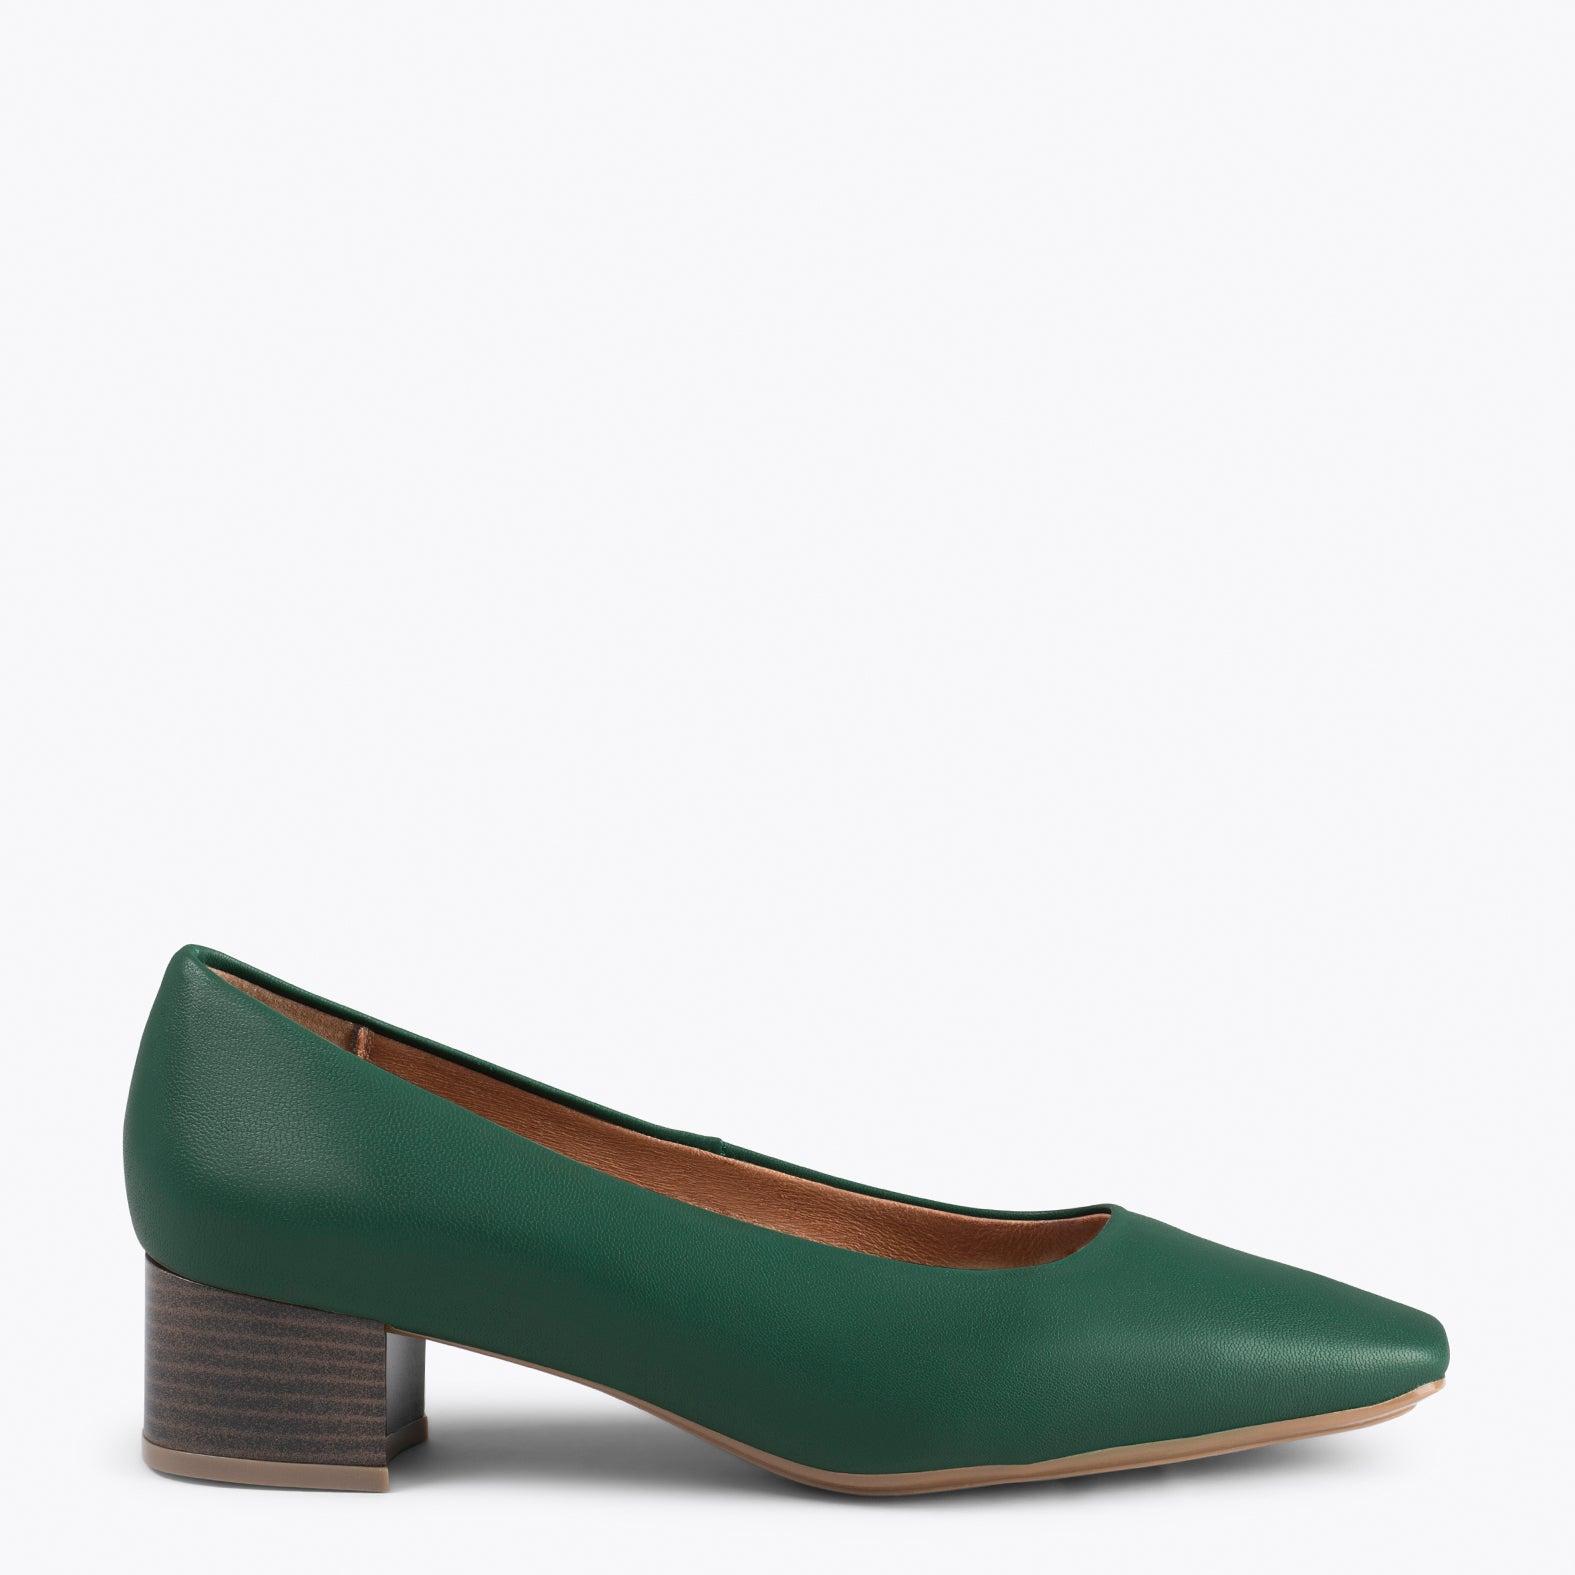 URBAN LADY – GREEN nappa leather low heels